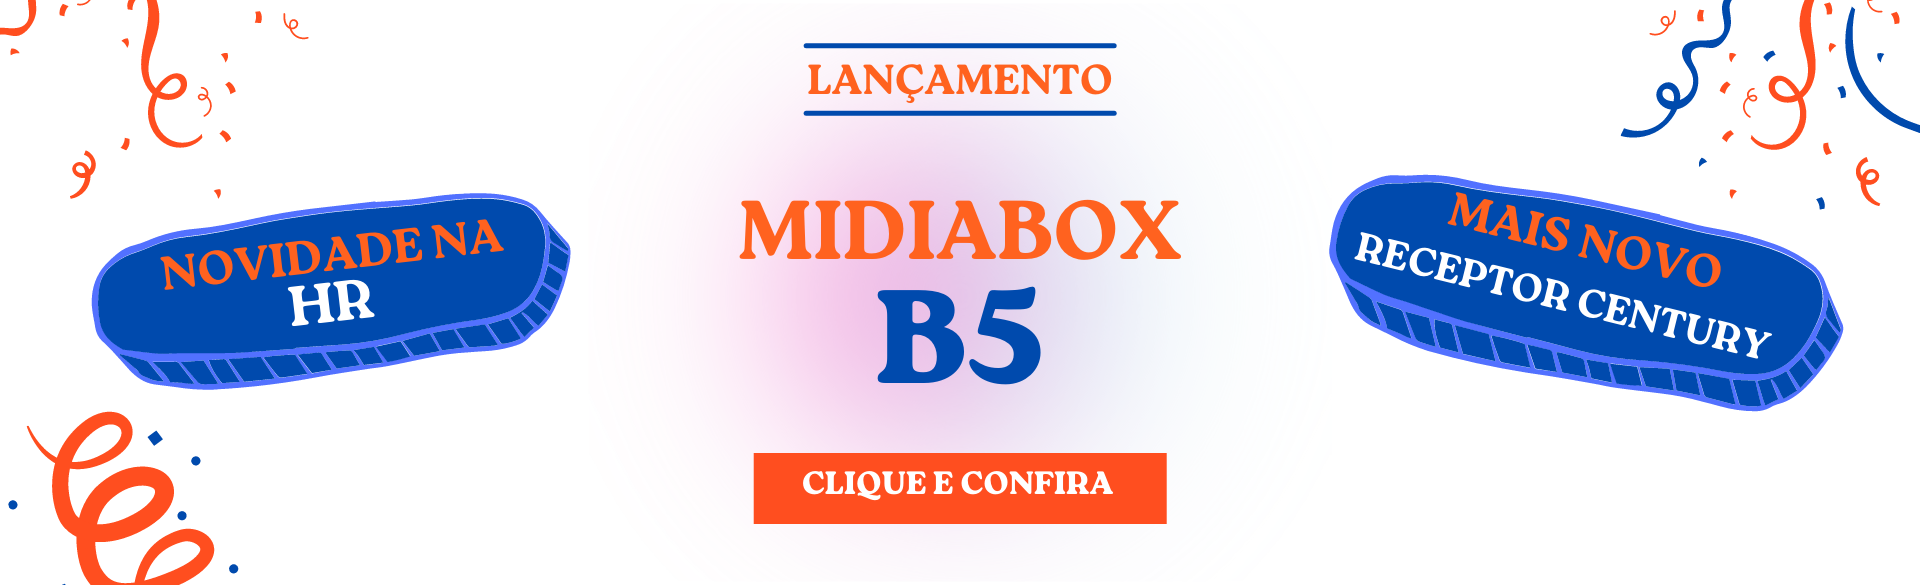 Receptor Midiabox B5 LANÇAMENTO